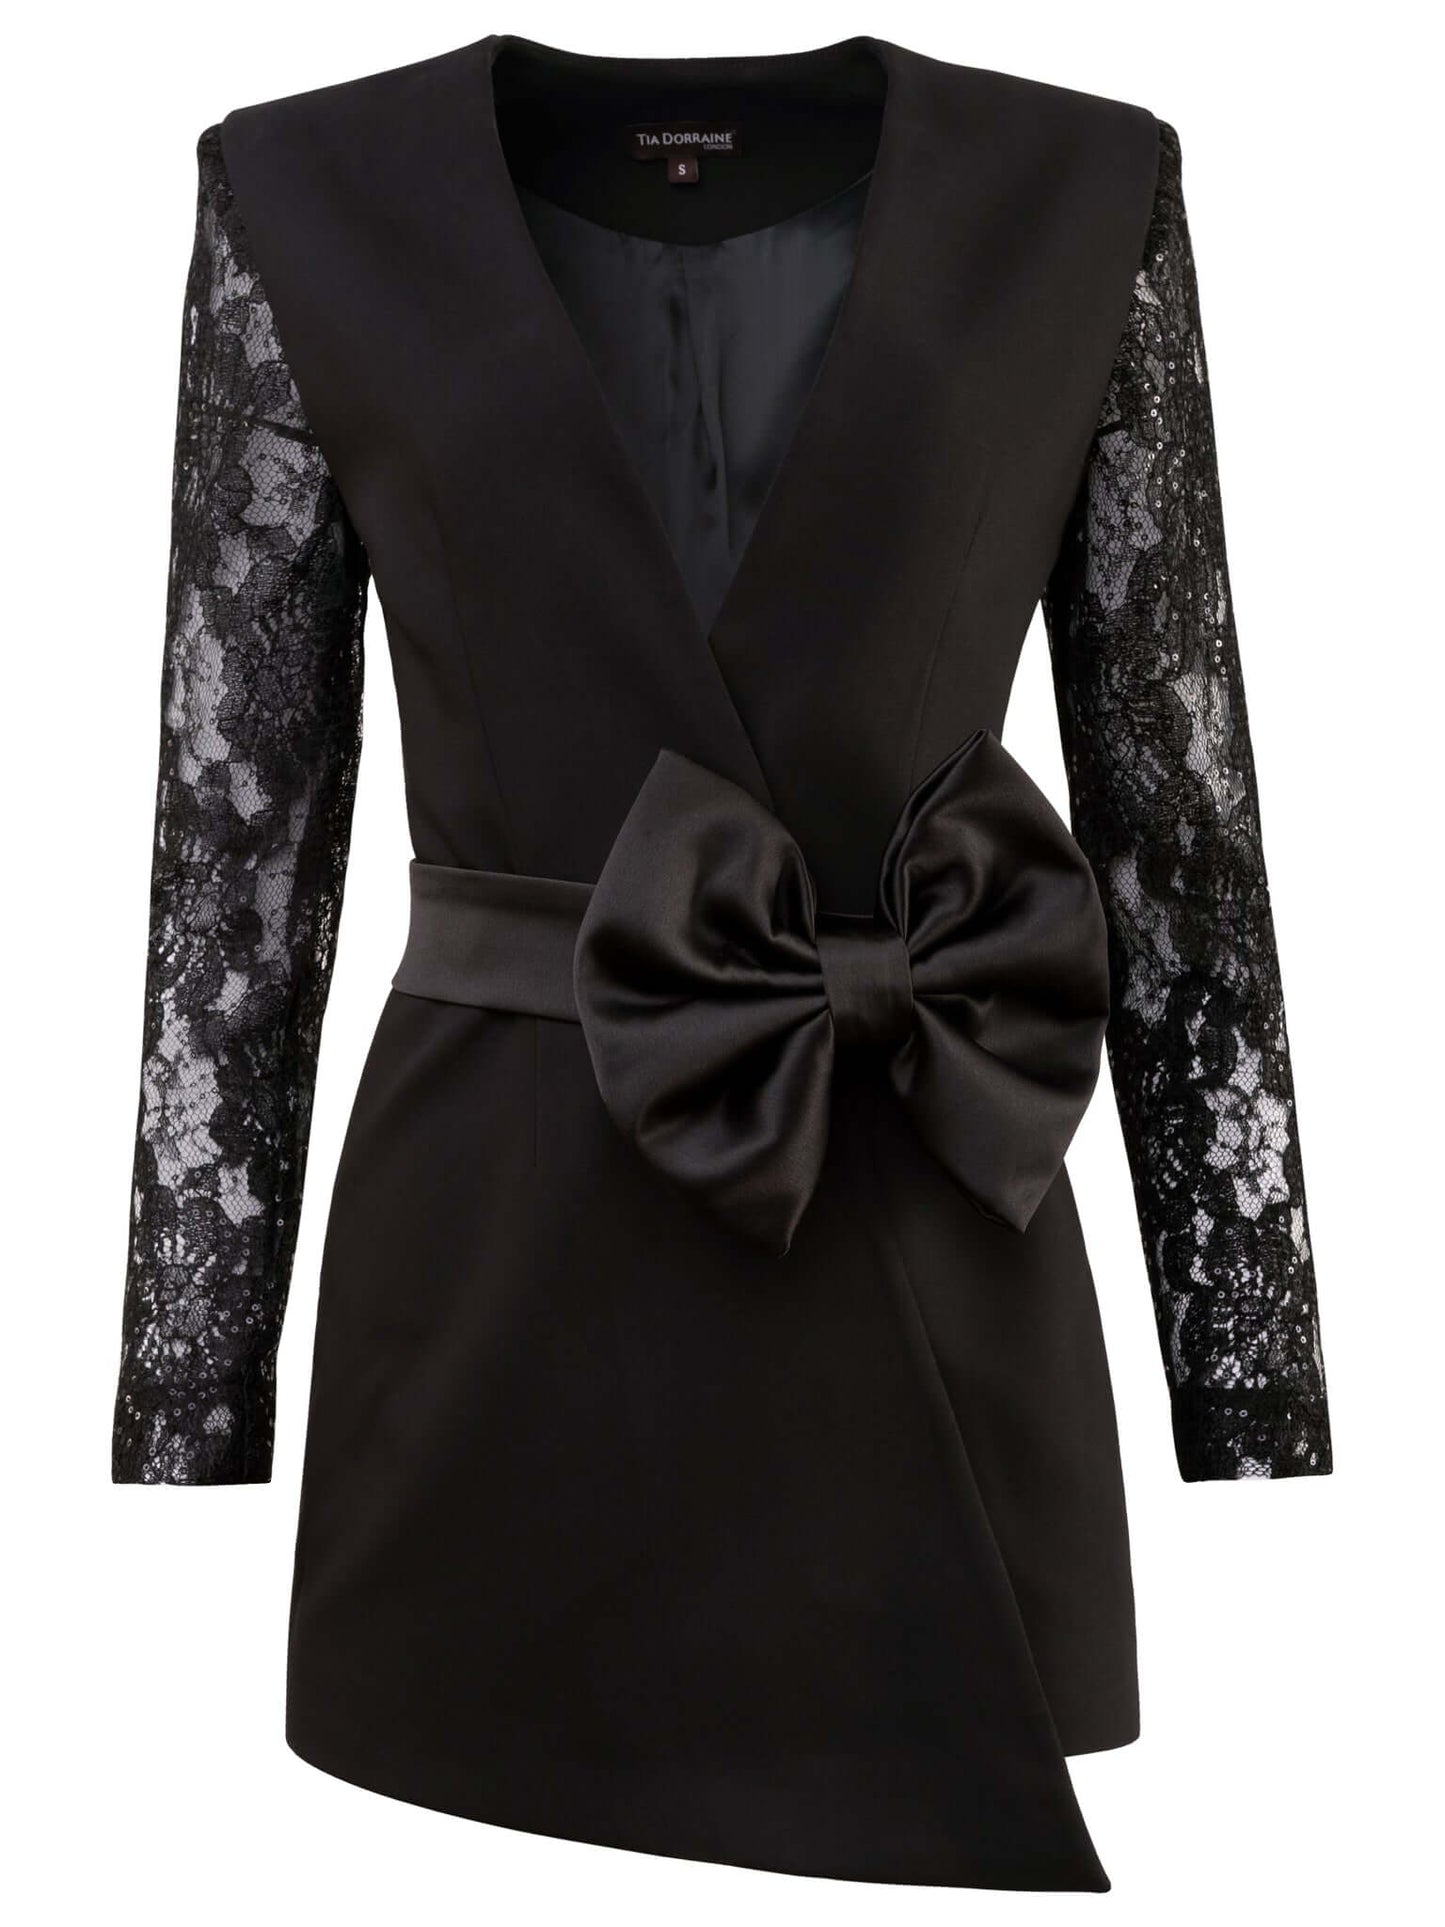 Glowing in the Dark Suit by Tia Dorraine Women's Luxury Fashion Designer Clothing Brand